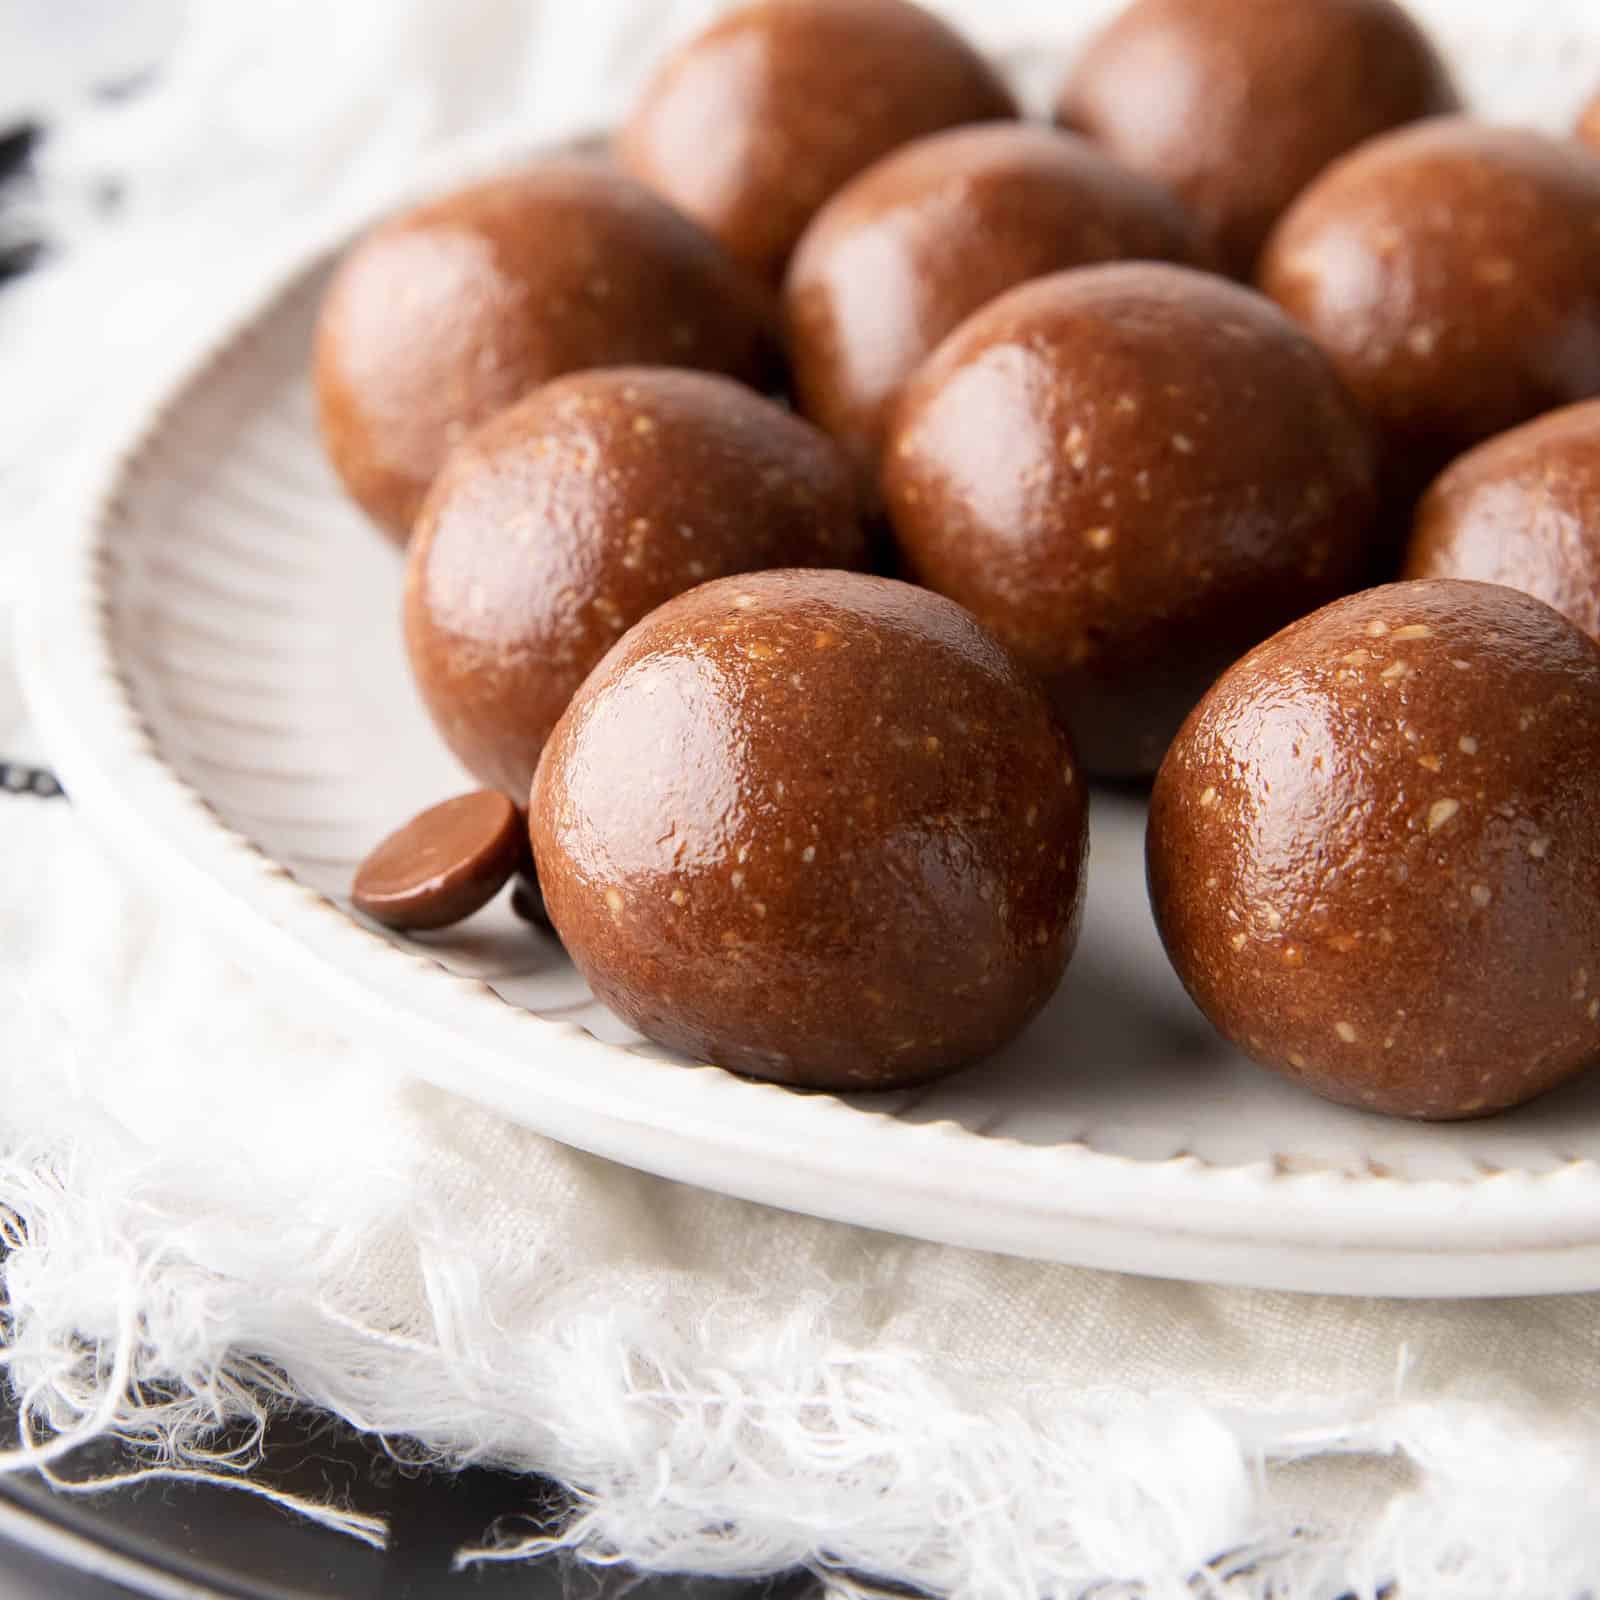 4 Ingredient Hazelnut Chocolate Energy Balls – Nutella! - Beaming Baker